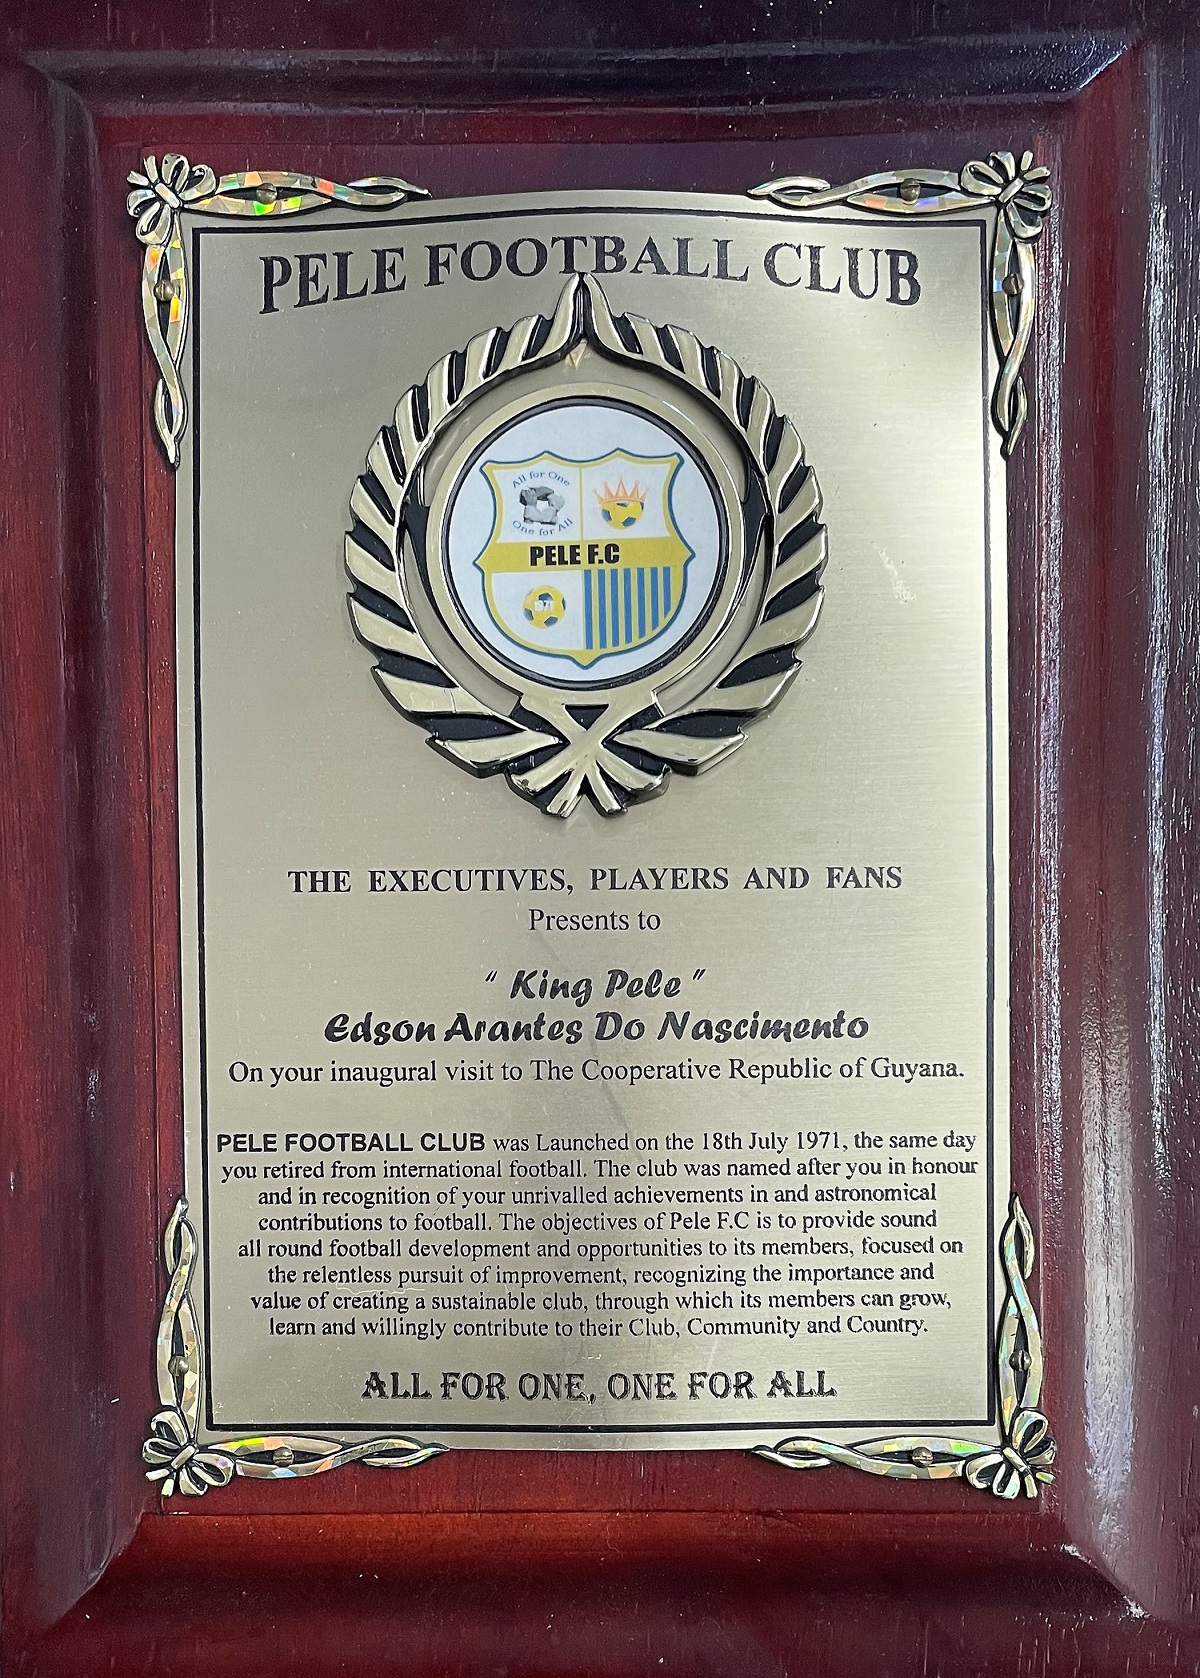 Pelé December 12, 2009, Pele Football Club Of Guyana Plaque. Pele Football Club Was Launched On 18th